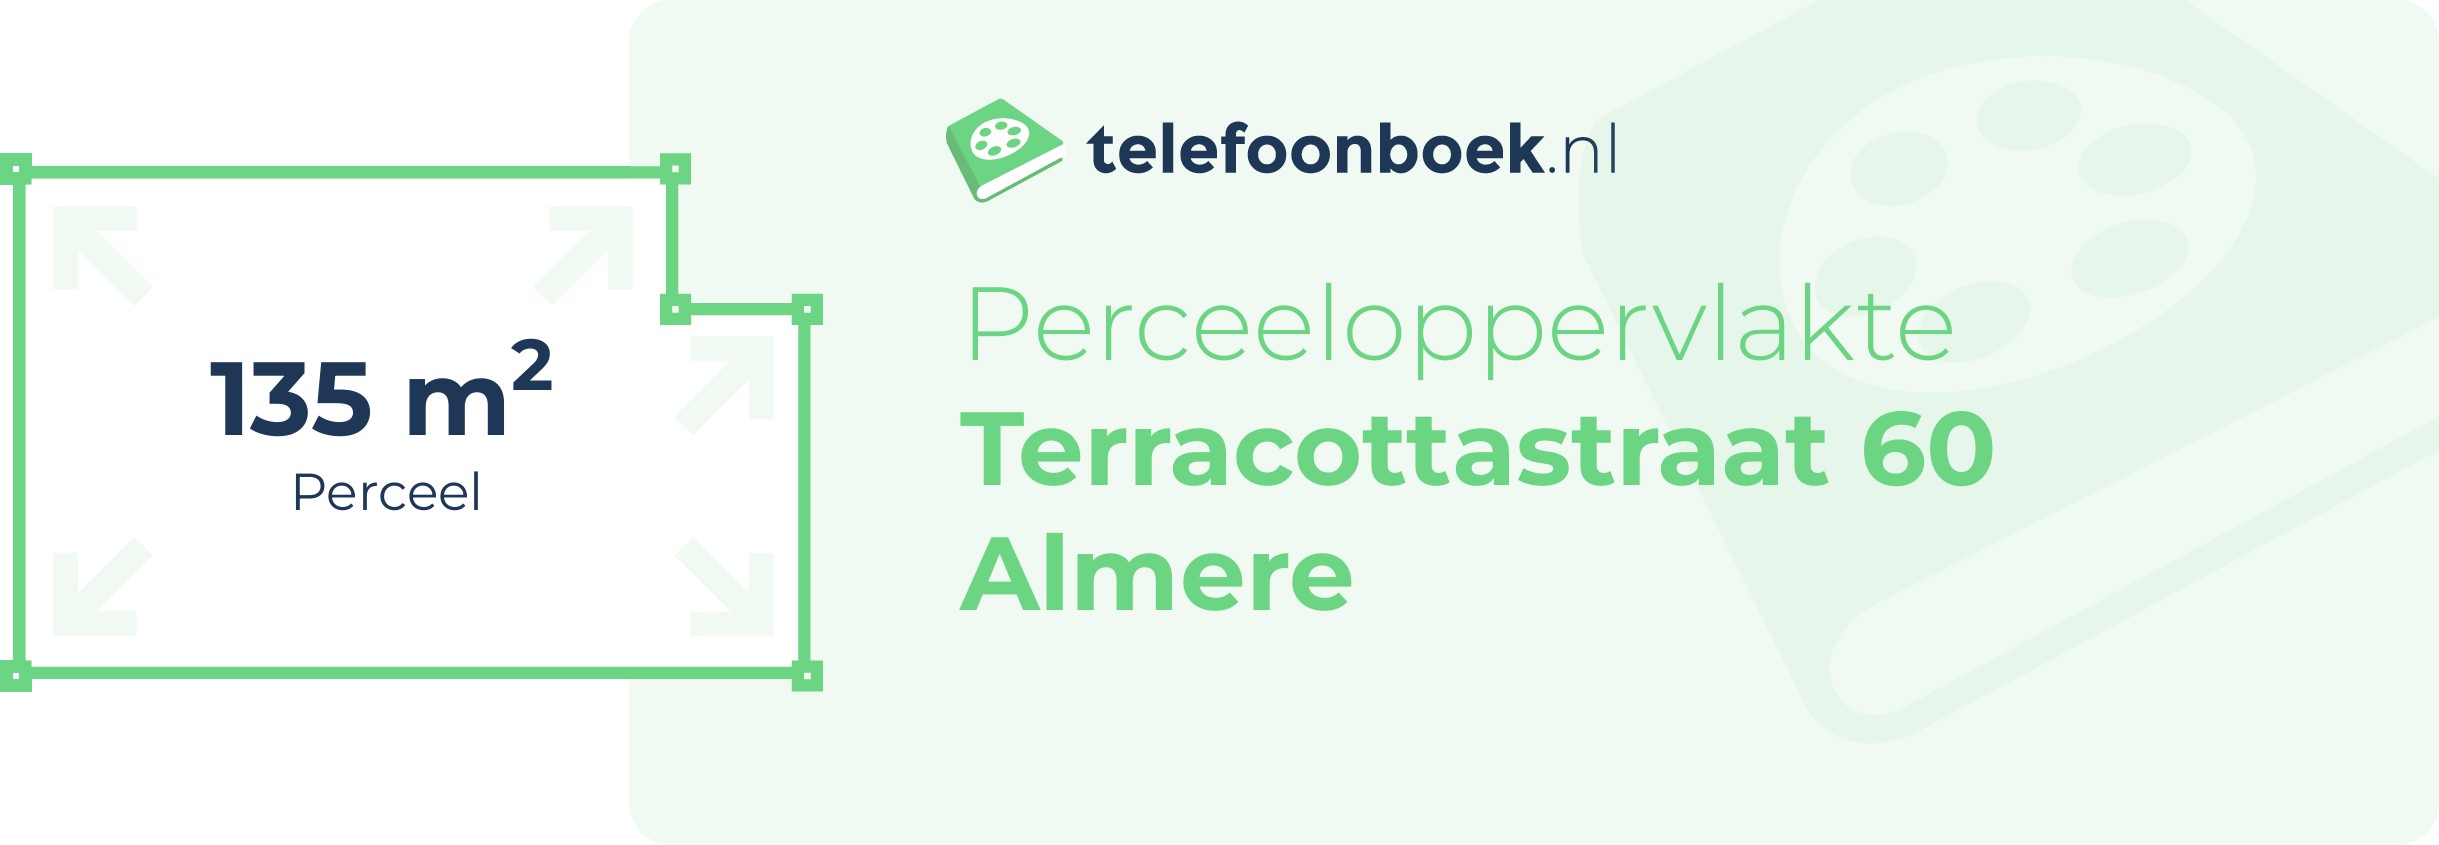 Perceeloppervlakte Terracottastraat 60 Almere